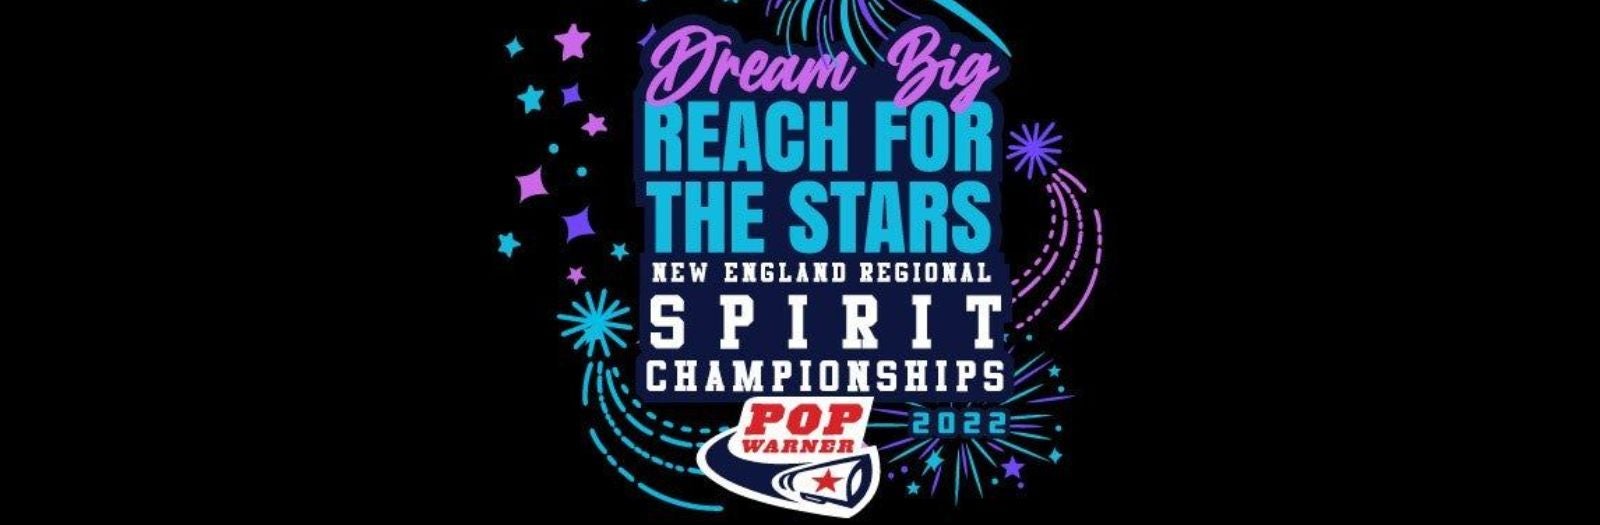 2022 New England Region Pop Warner Spirit Championships